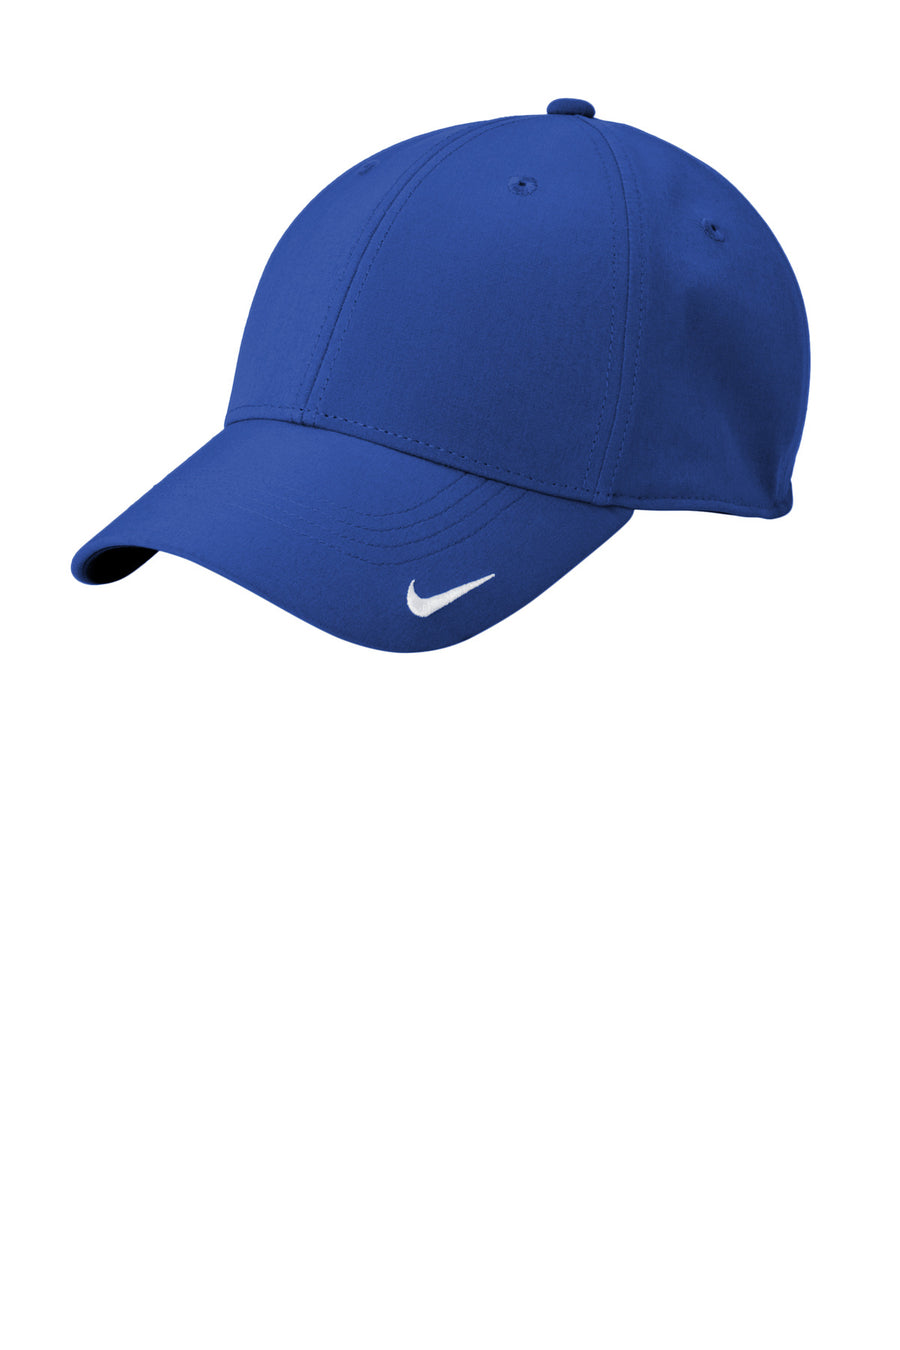 Nike Dri-FIT Legacy Cap, NKFB6447